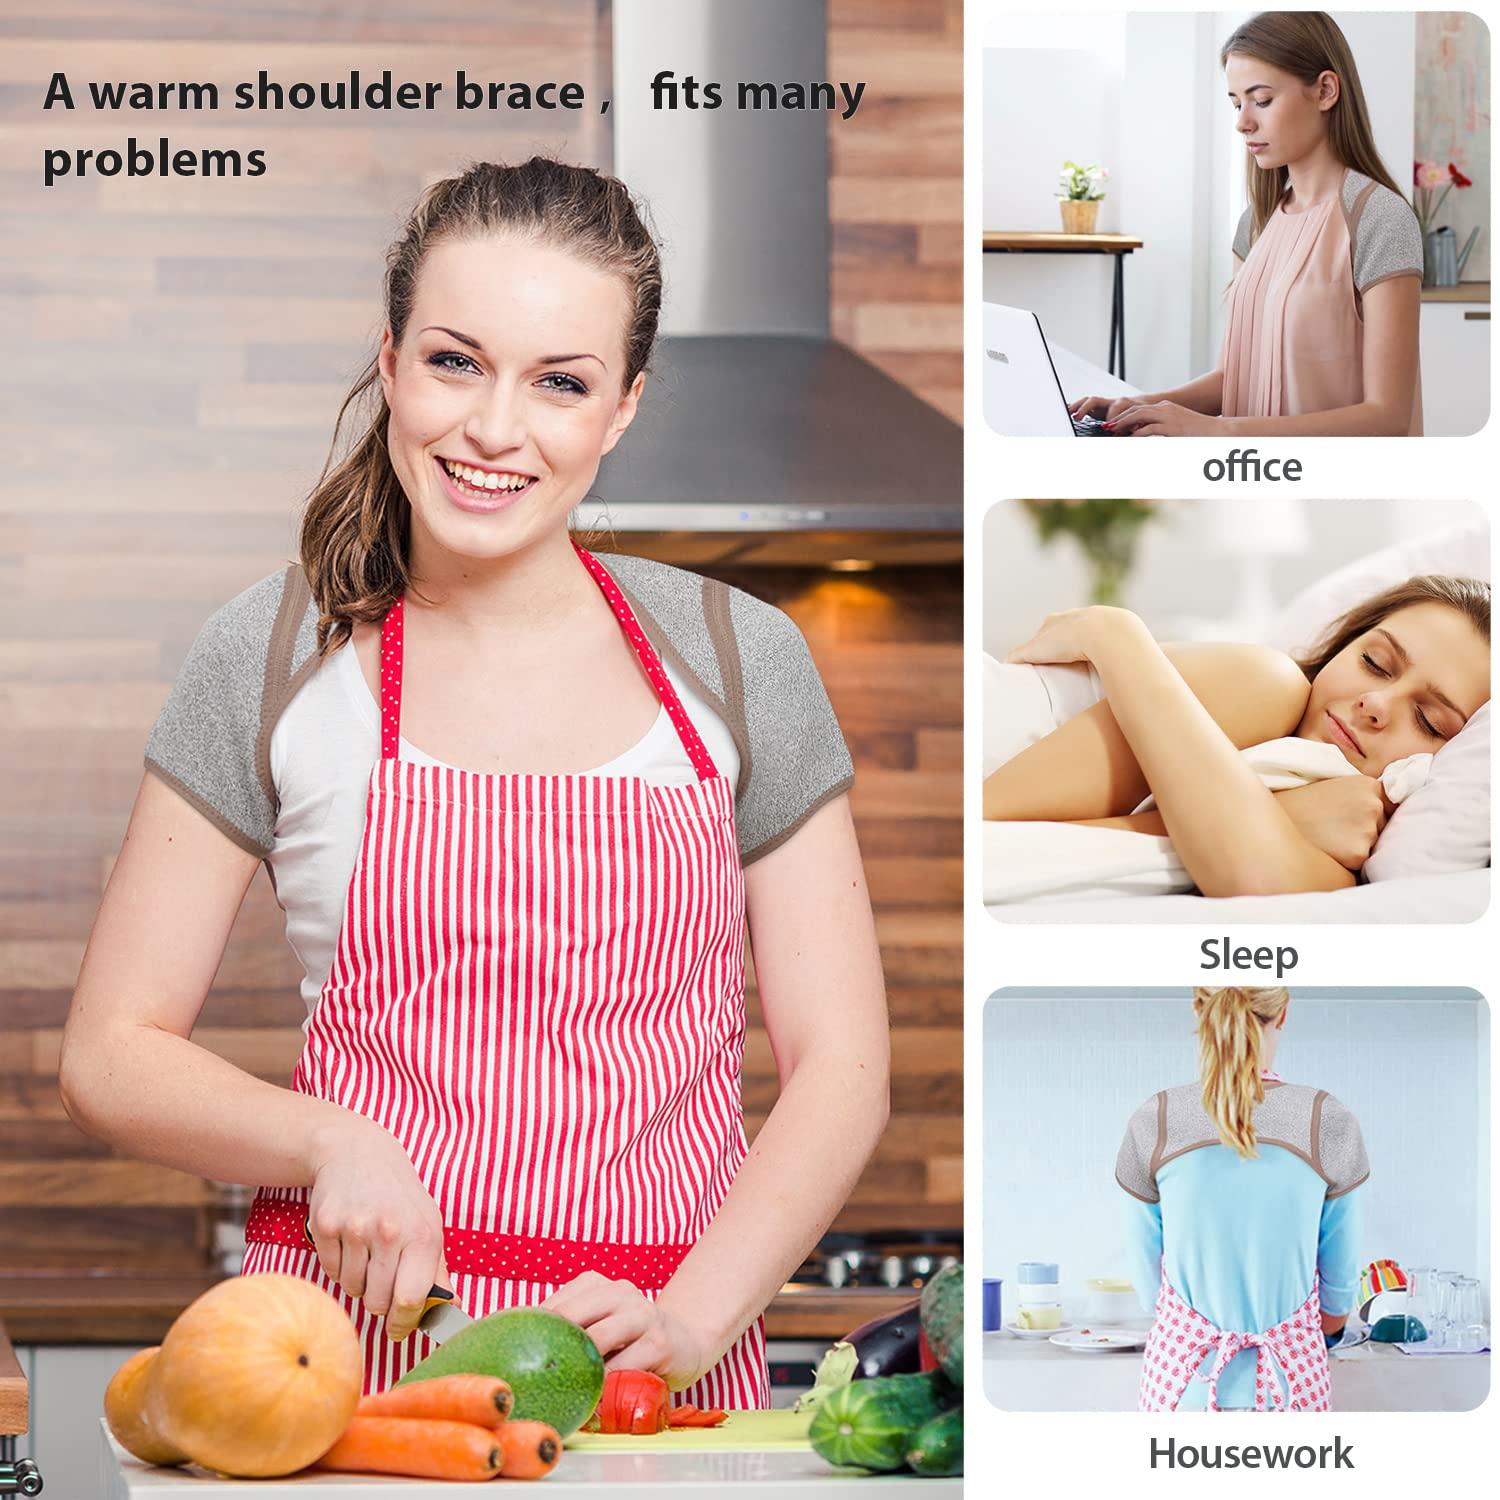 KD Shoulder Support Brace: Double Shoulder Braces for Women/Men Relief  Tendonitis, Arthritis, Shoulder Pain, Upgraded Graphene Warm Rotator Cuff